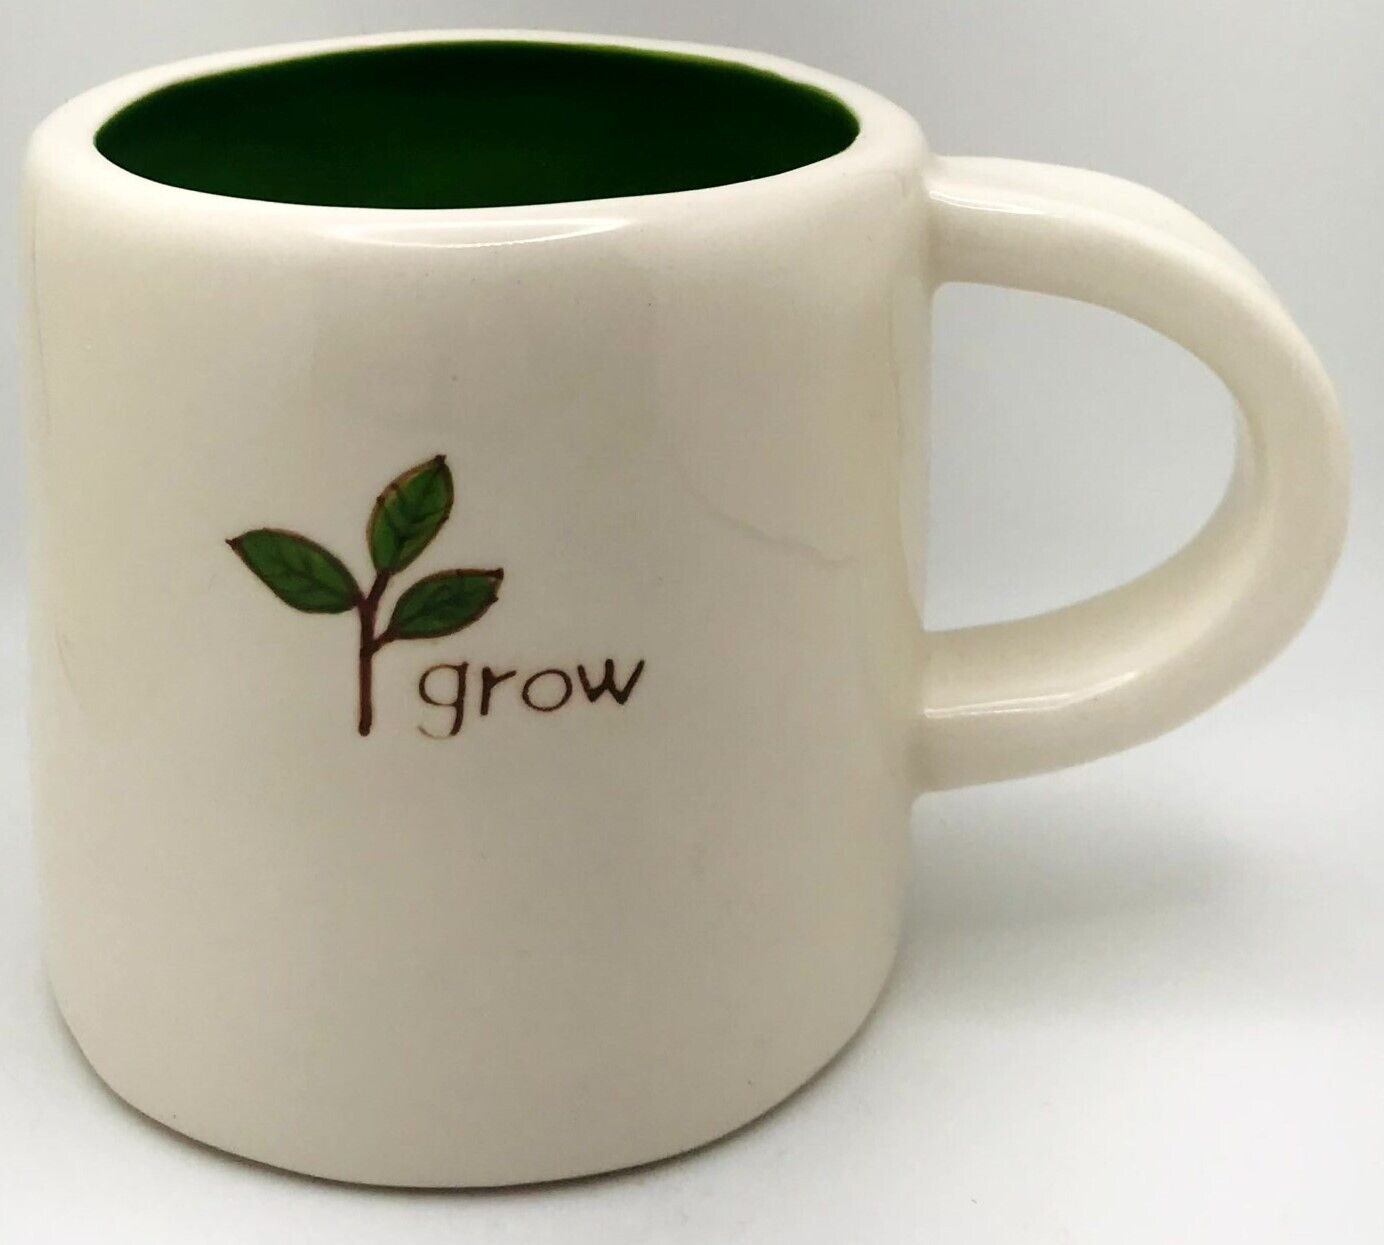 2008 Starbucks Grow Coffee Cup Mug 10 oz Ivory & Green Handpainted 